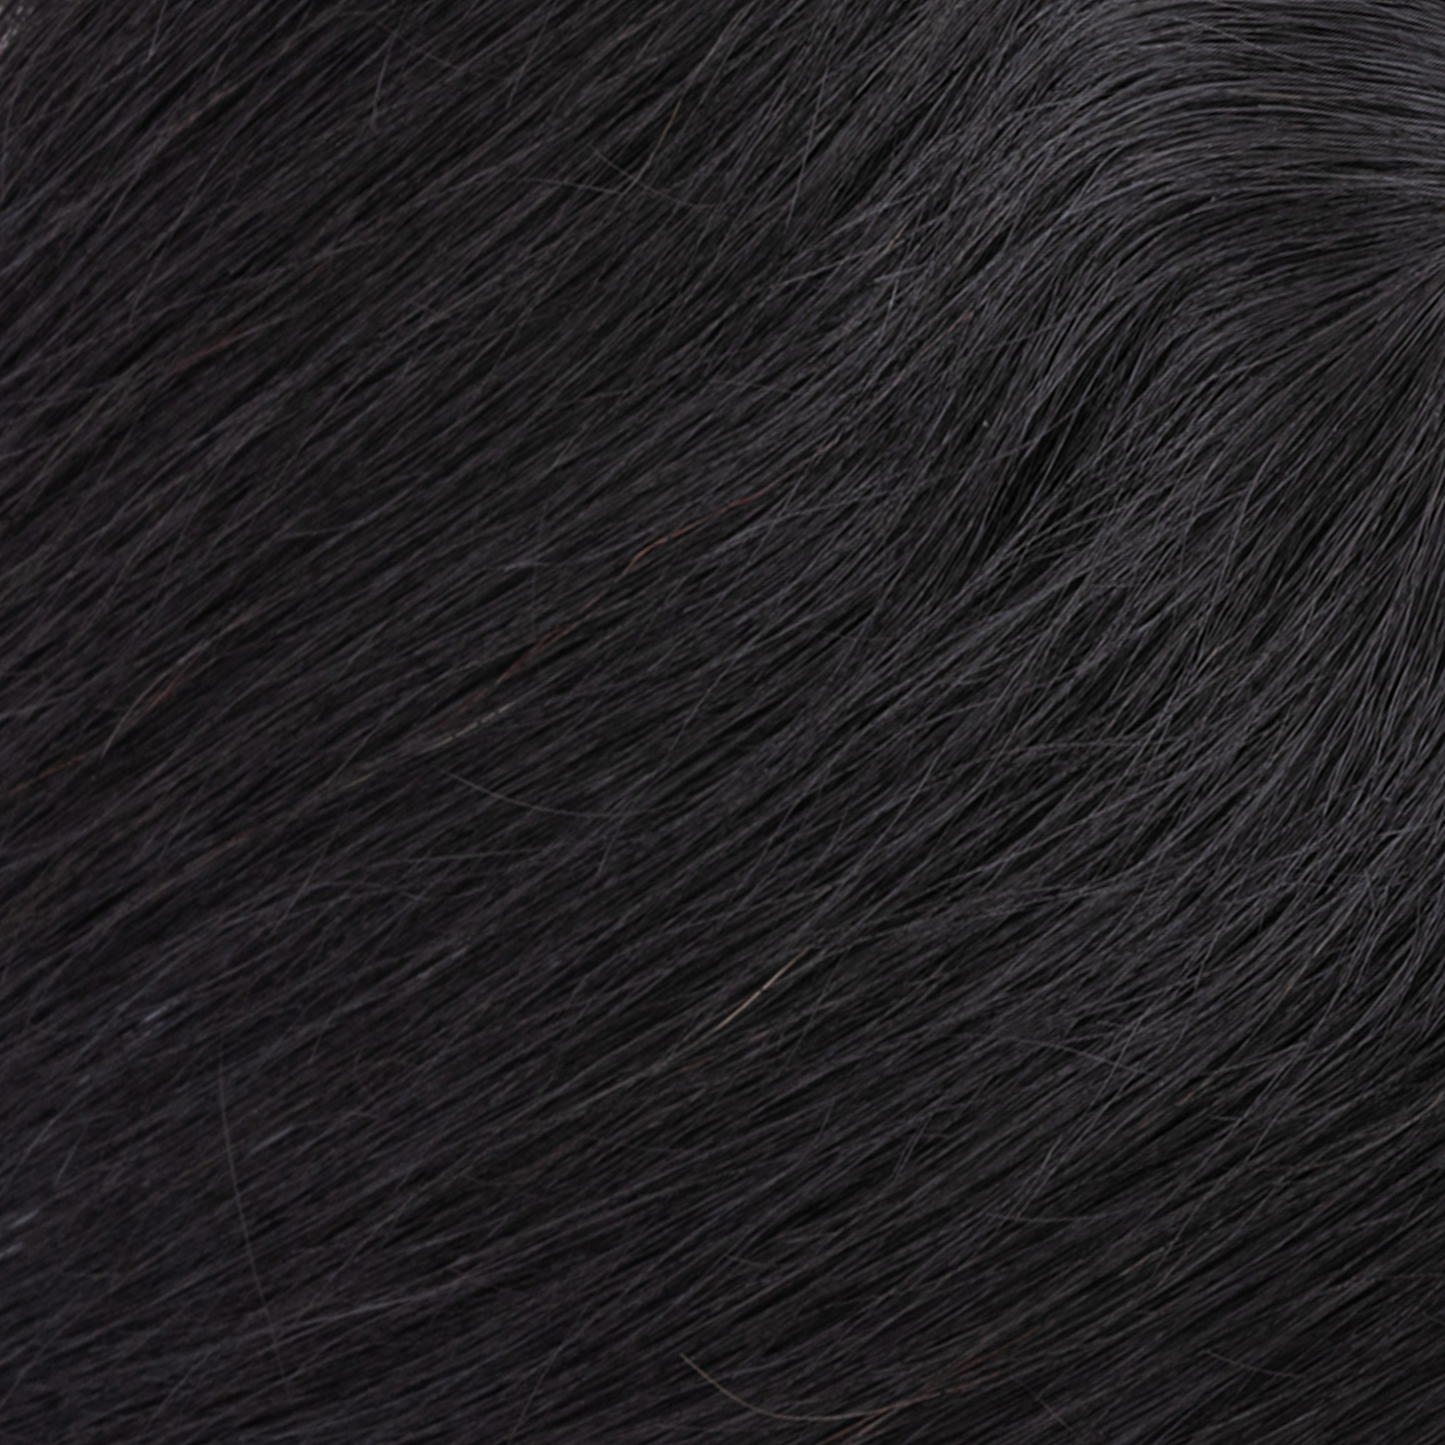 3.5x4" Silk Base Natural Black Human Hair Topper segohair.com